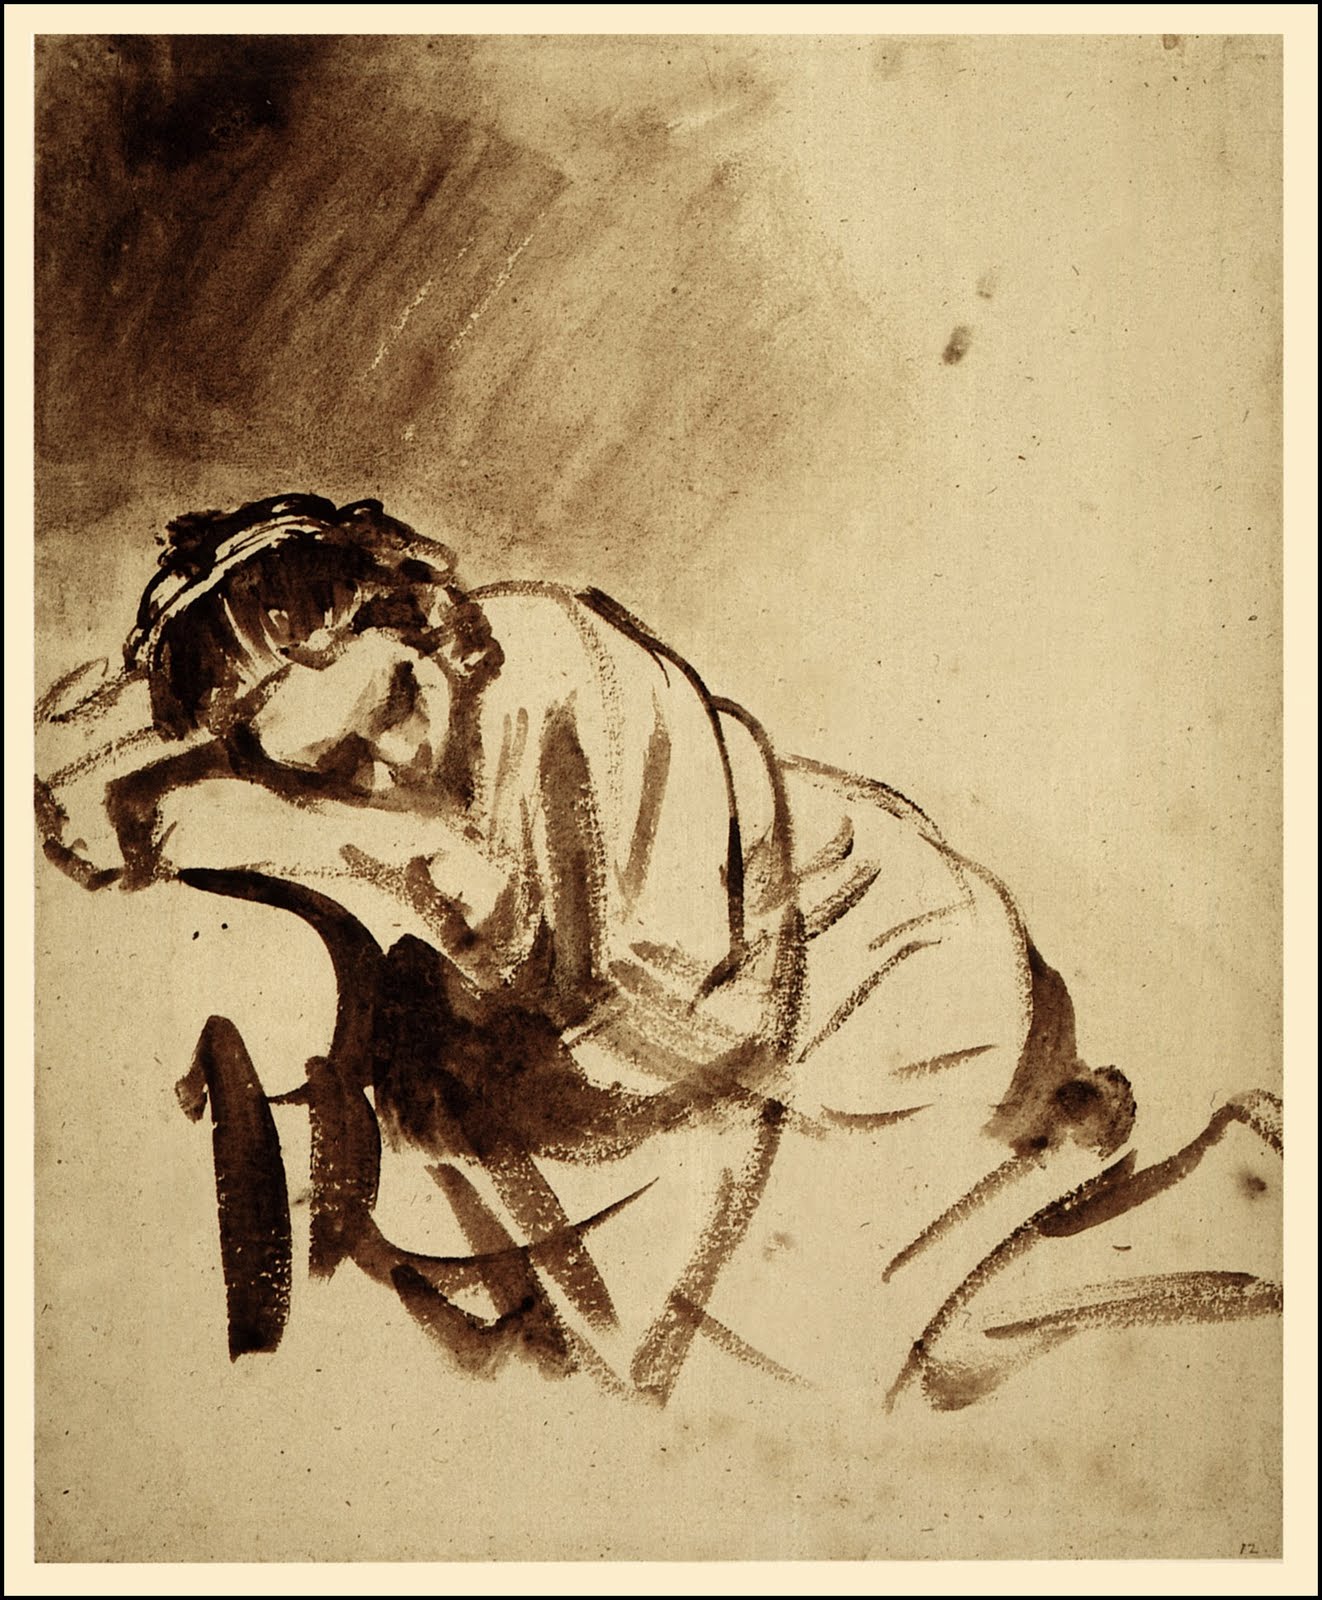 Giovane addormentata by Rembrandt van Rijn - 1654/1654 - 246 x 203 mm British Museum